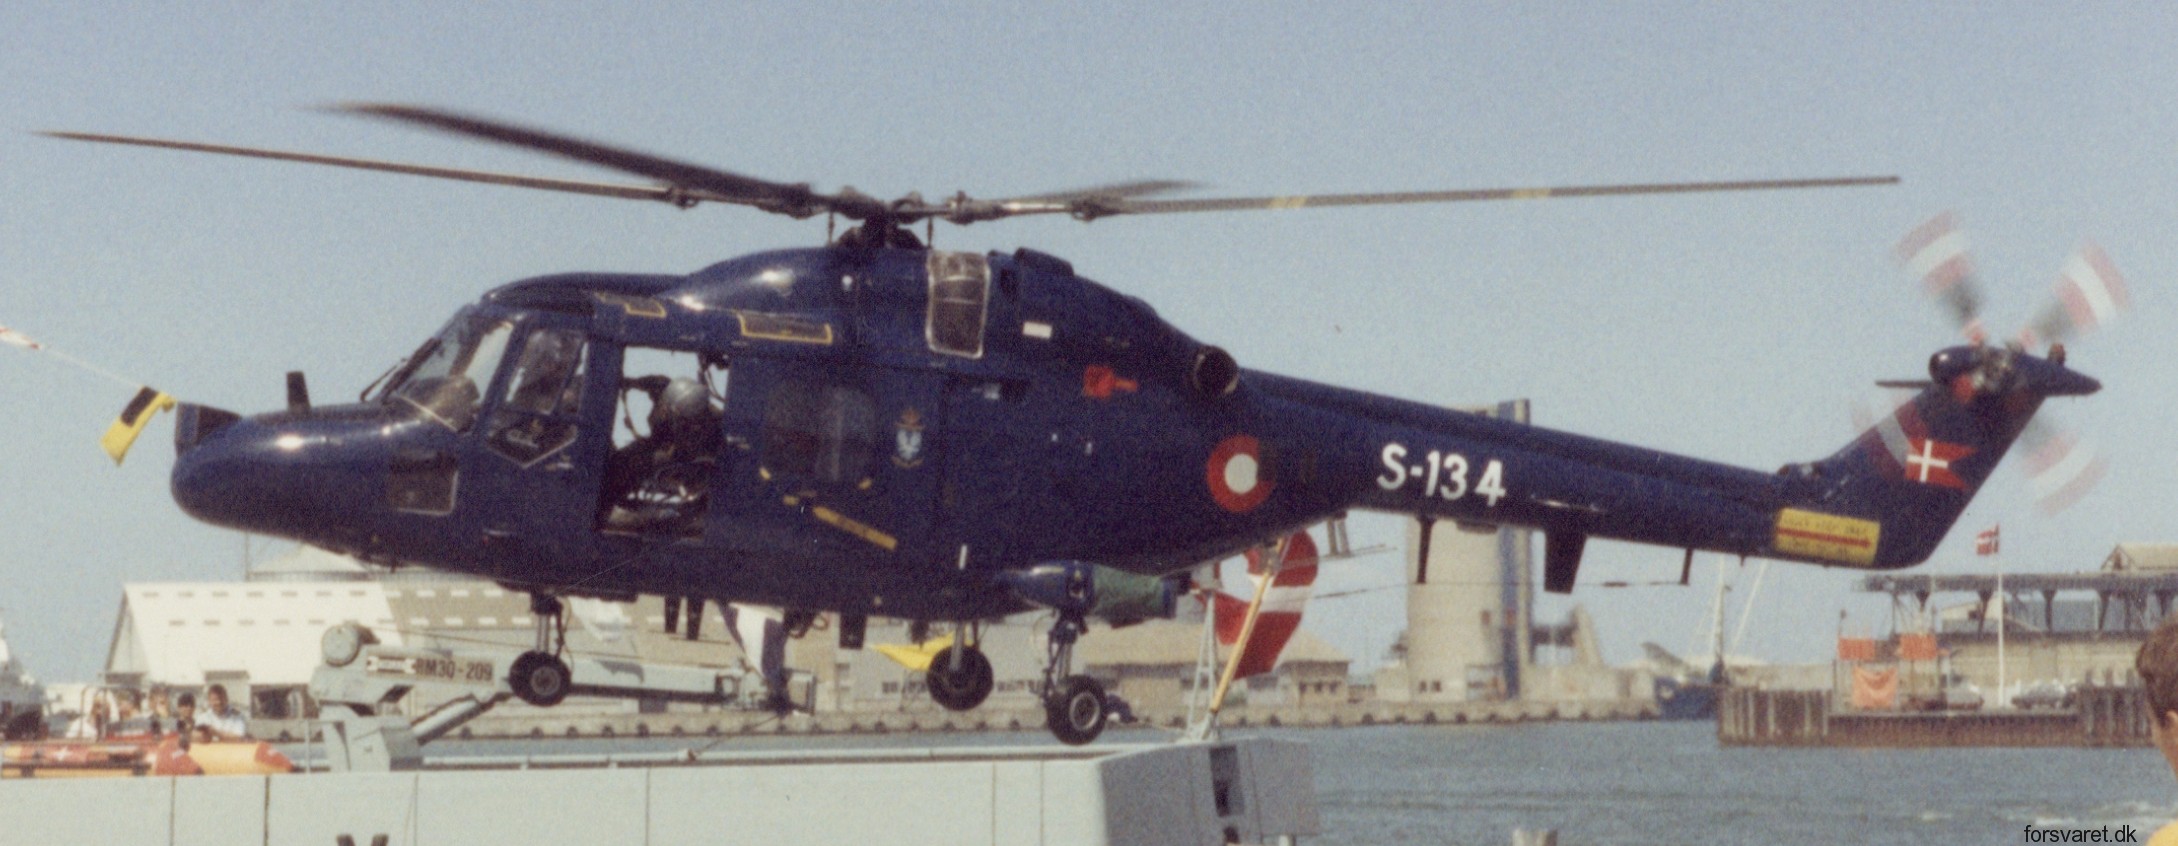 lynx mk.80 mk.90b helicopter westland royal danish navy air force kongelige danske marine flyvevabnet s-134 04